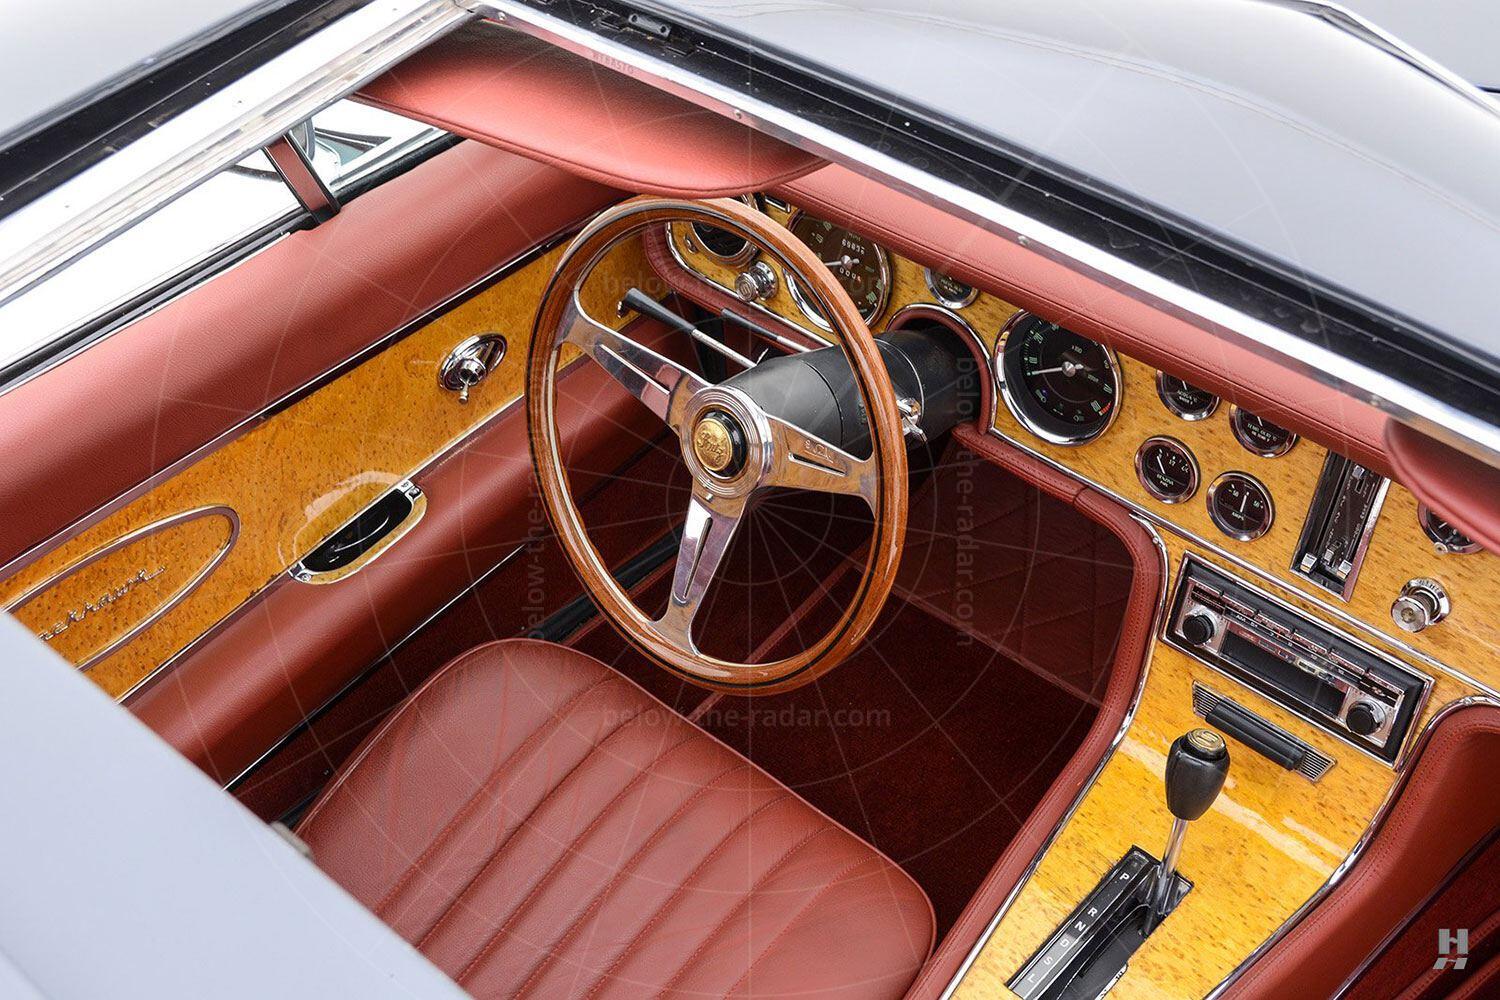 1971 Stutz Blackhawk coupé interior Pic: Hyman Ltd | 1971 Stutz Blackhawk coupé interior